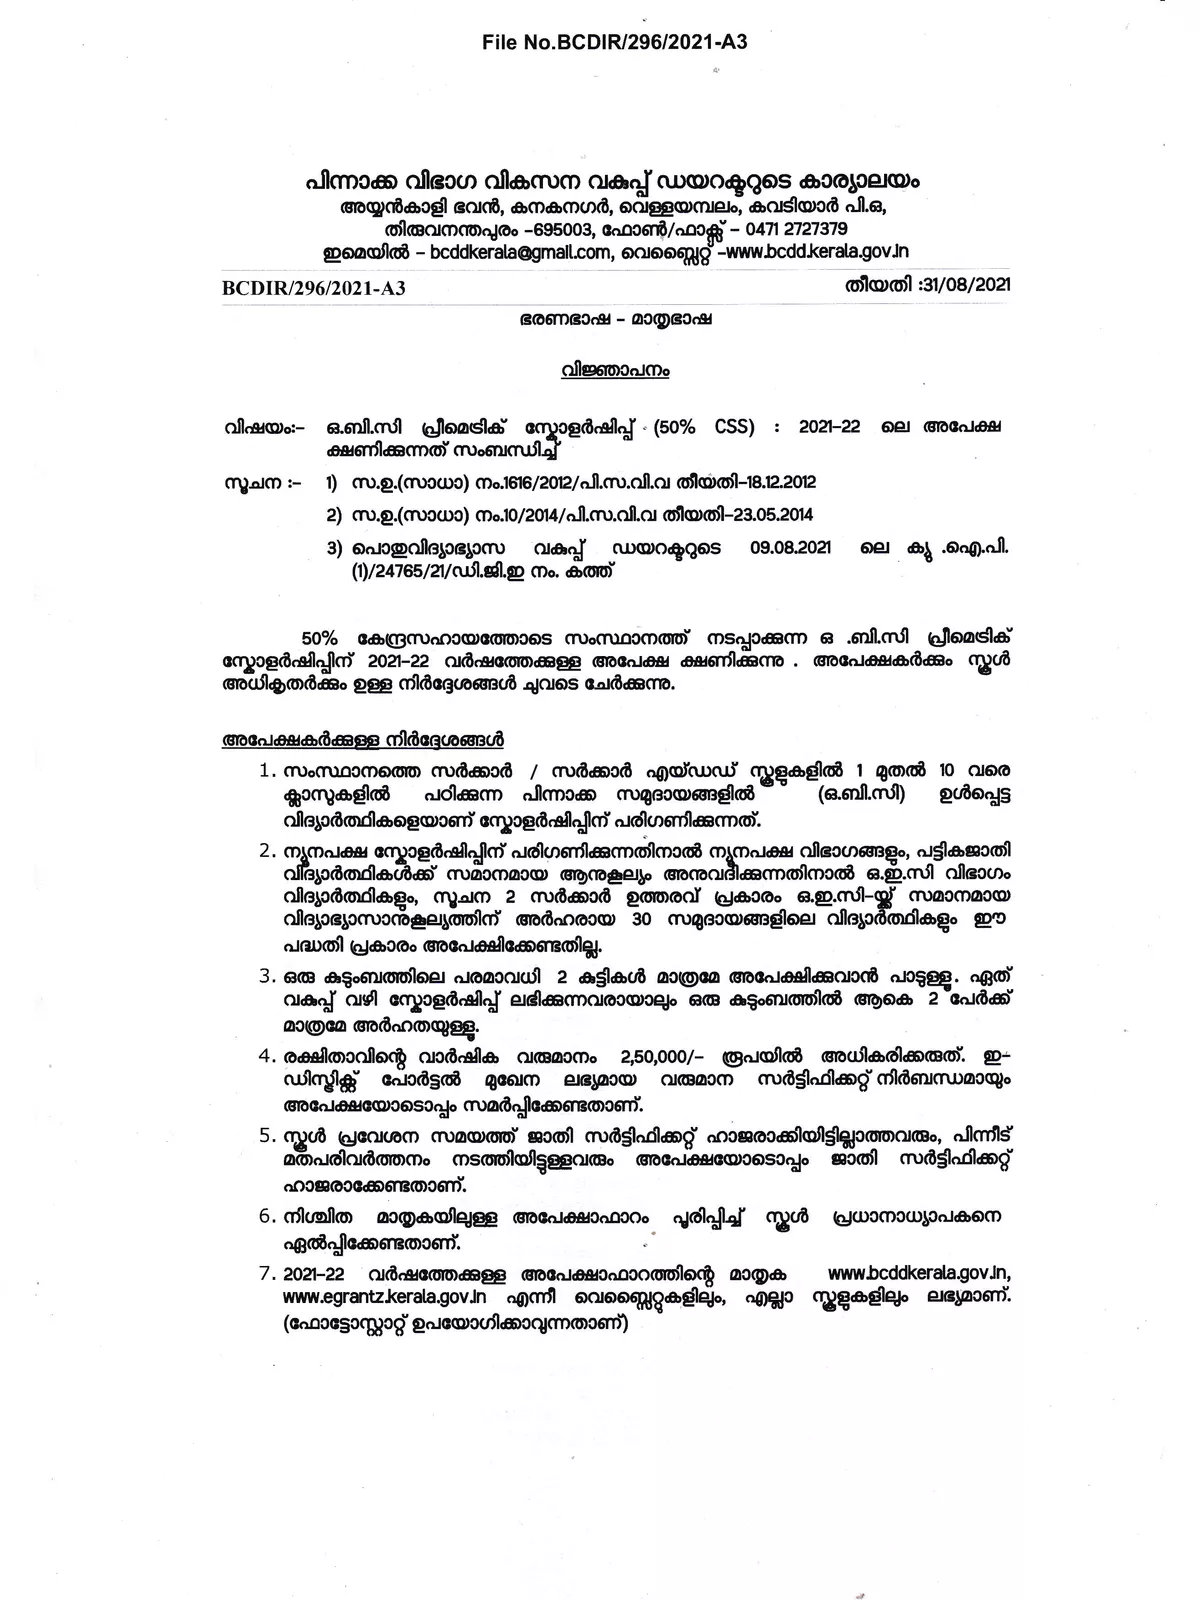 OBC Pre-Matric Scholarship 2021-22 Application Form Kerala